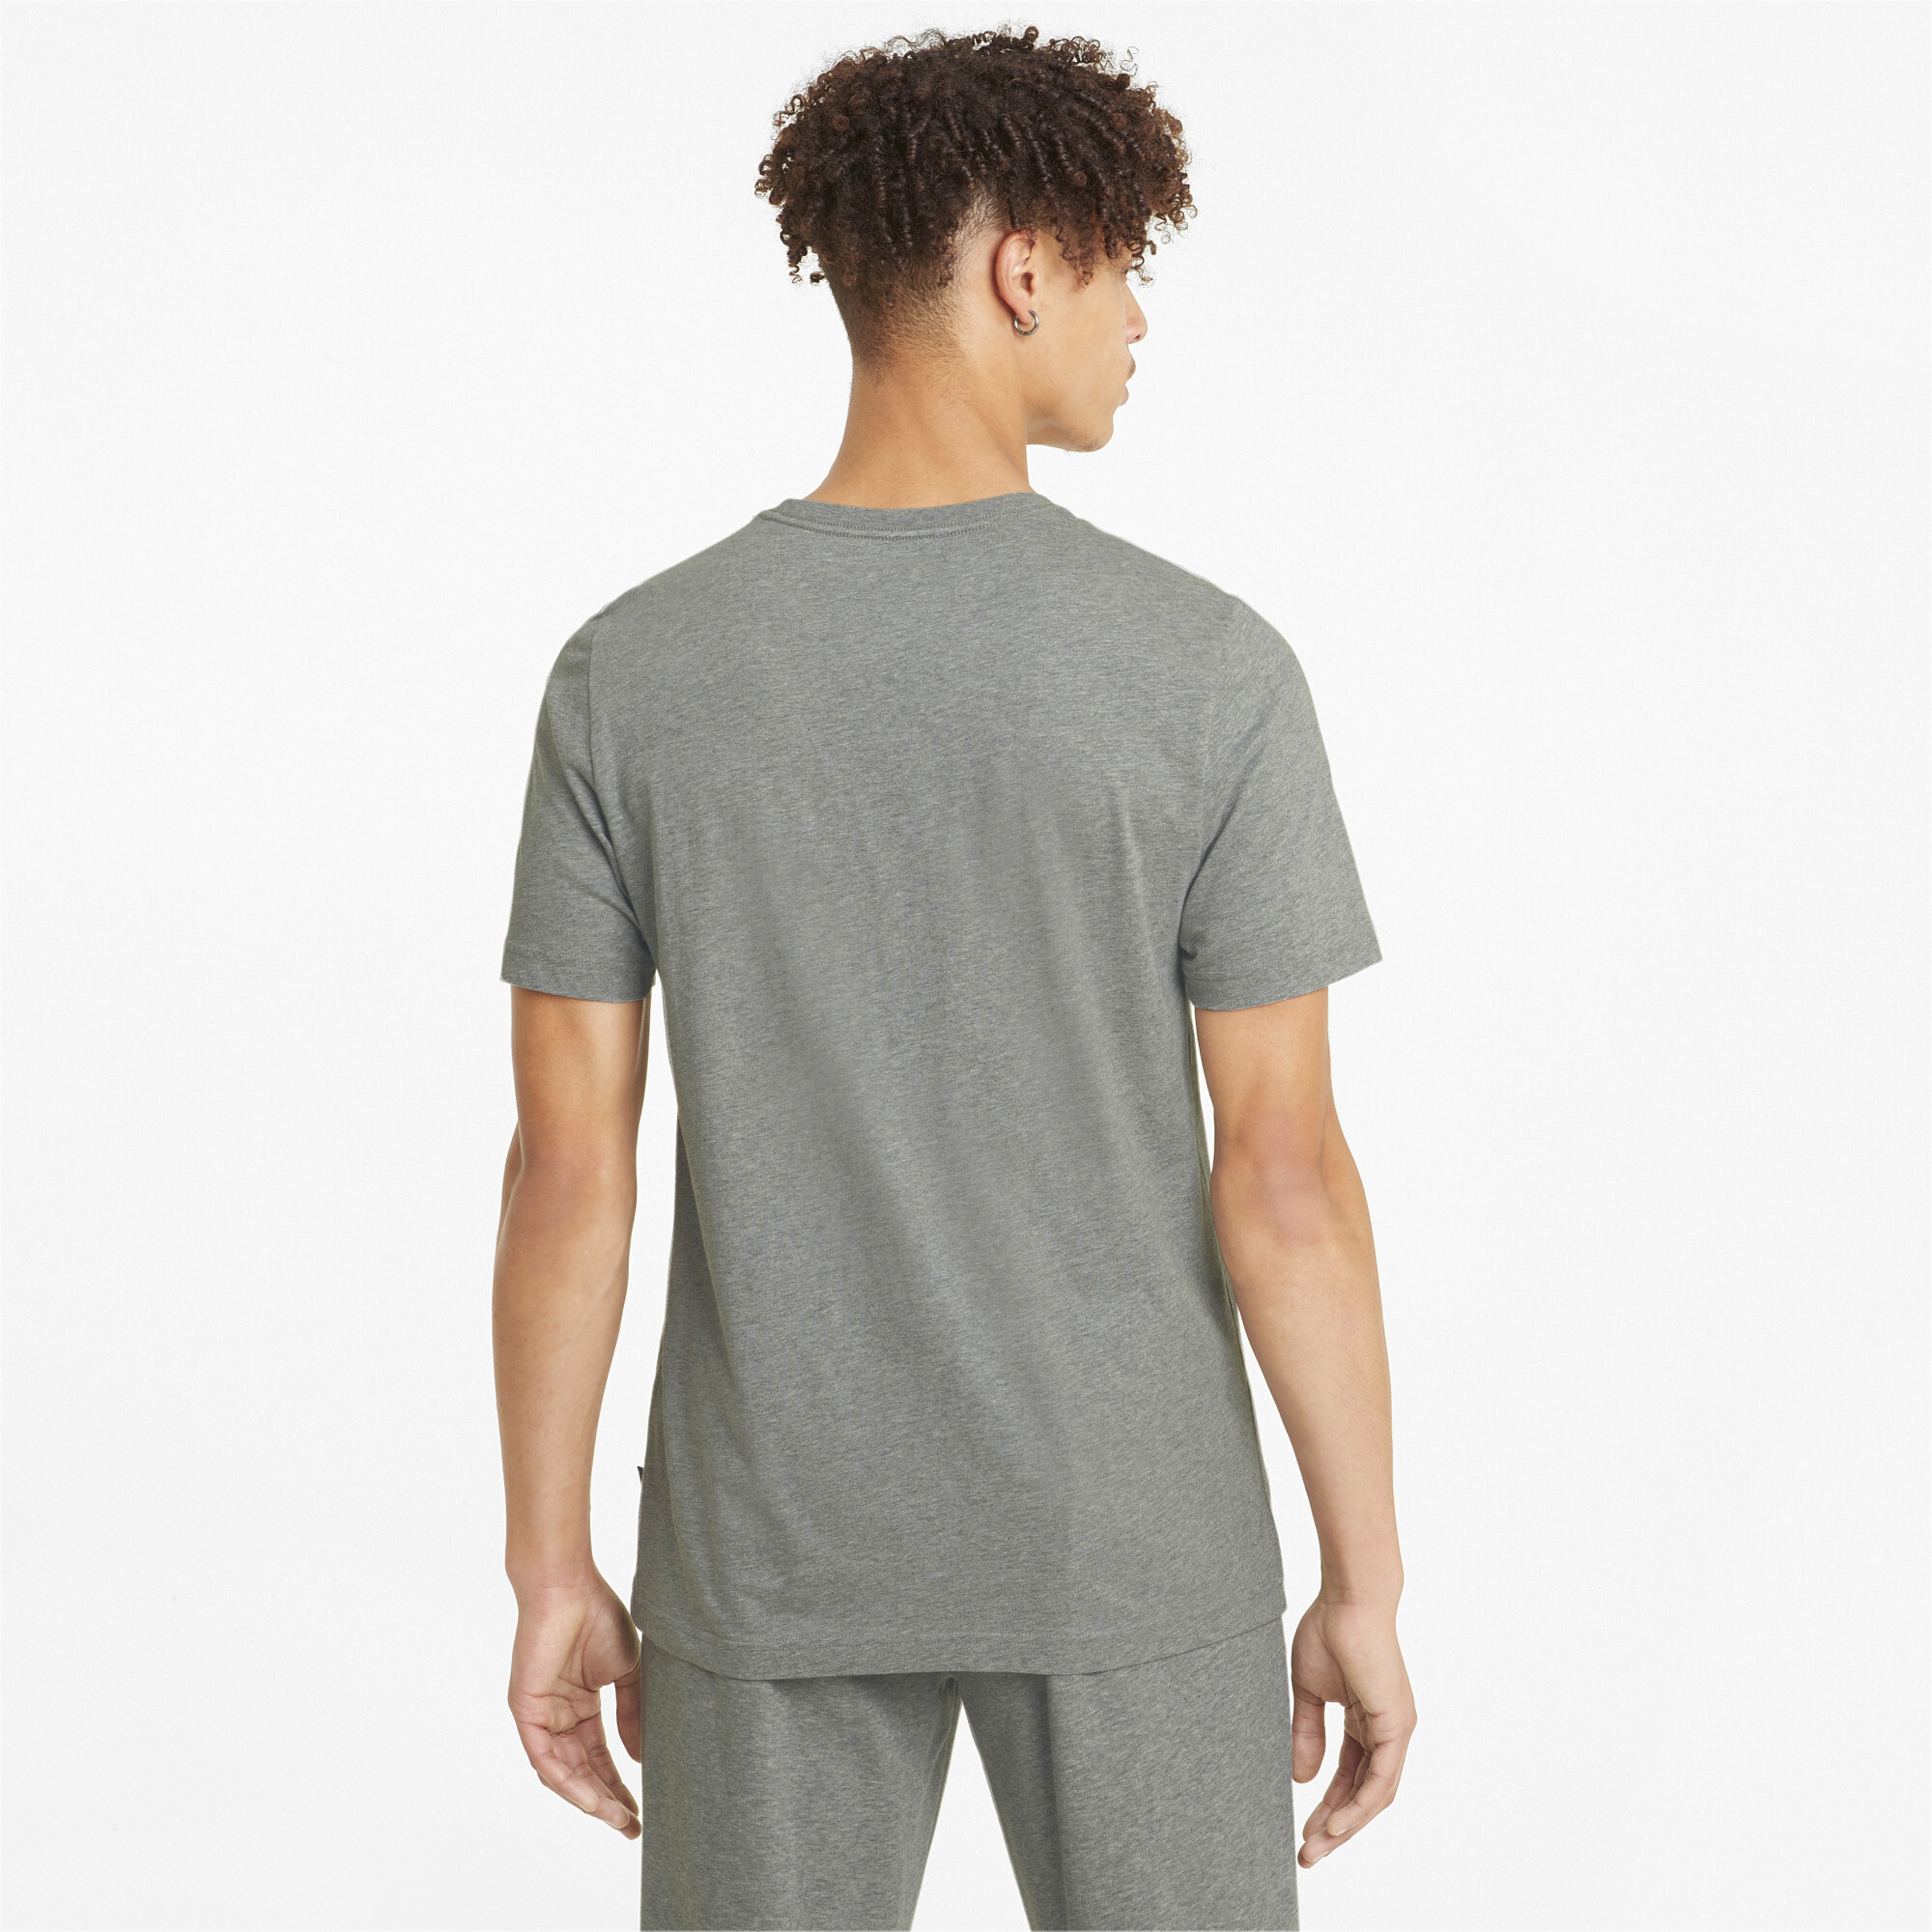 Men's Puma Essentials Small Logo T-Shirt, Gray, Size 3XL, Clothing